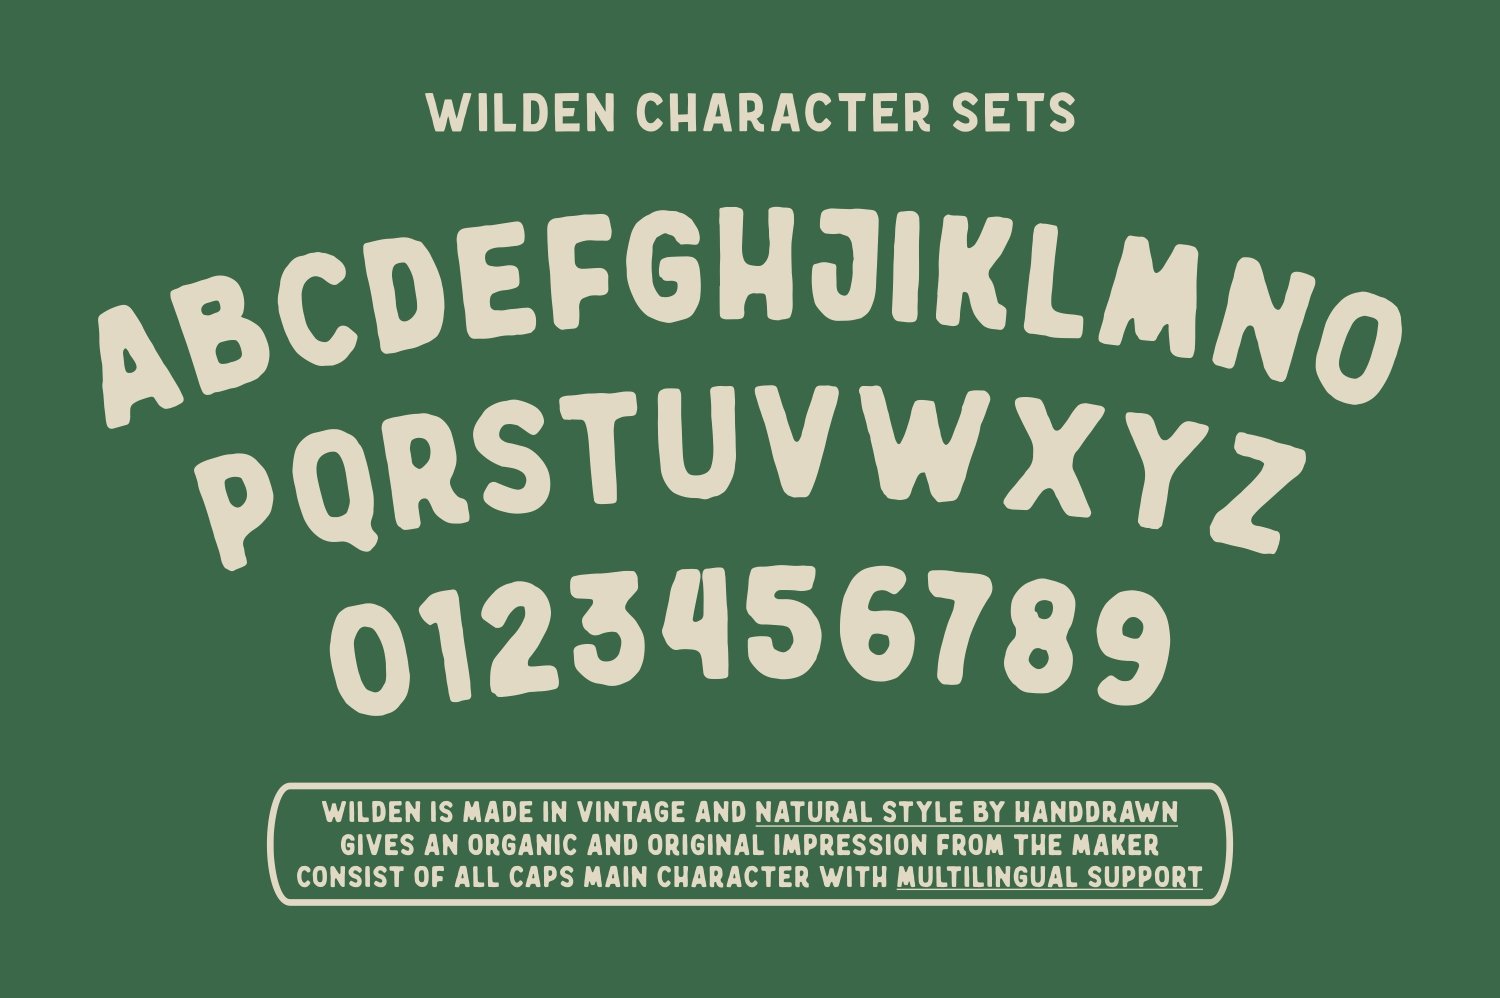 Wilden - Handdrawn Vintage Typeface preview image.